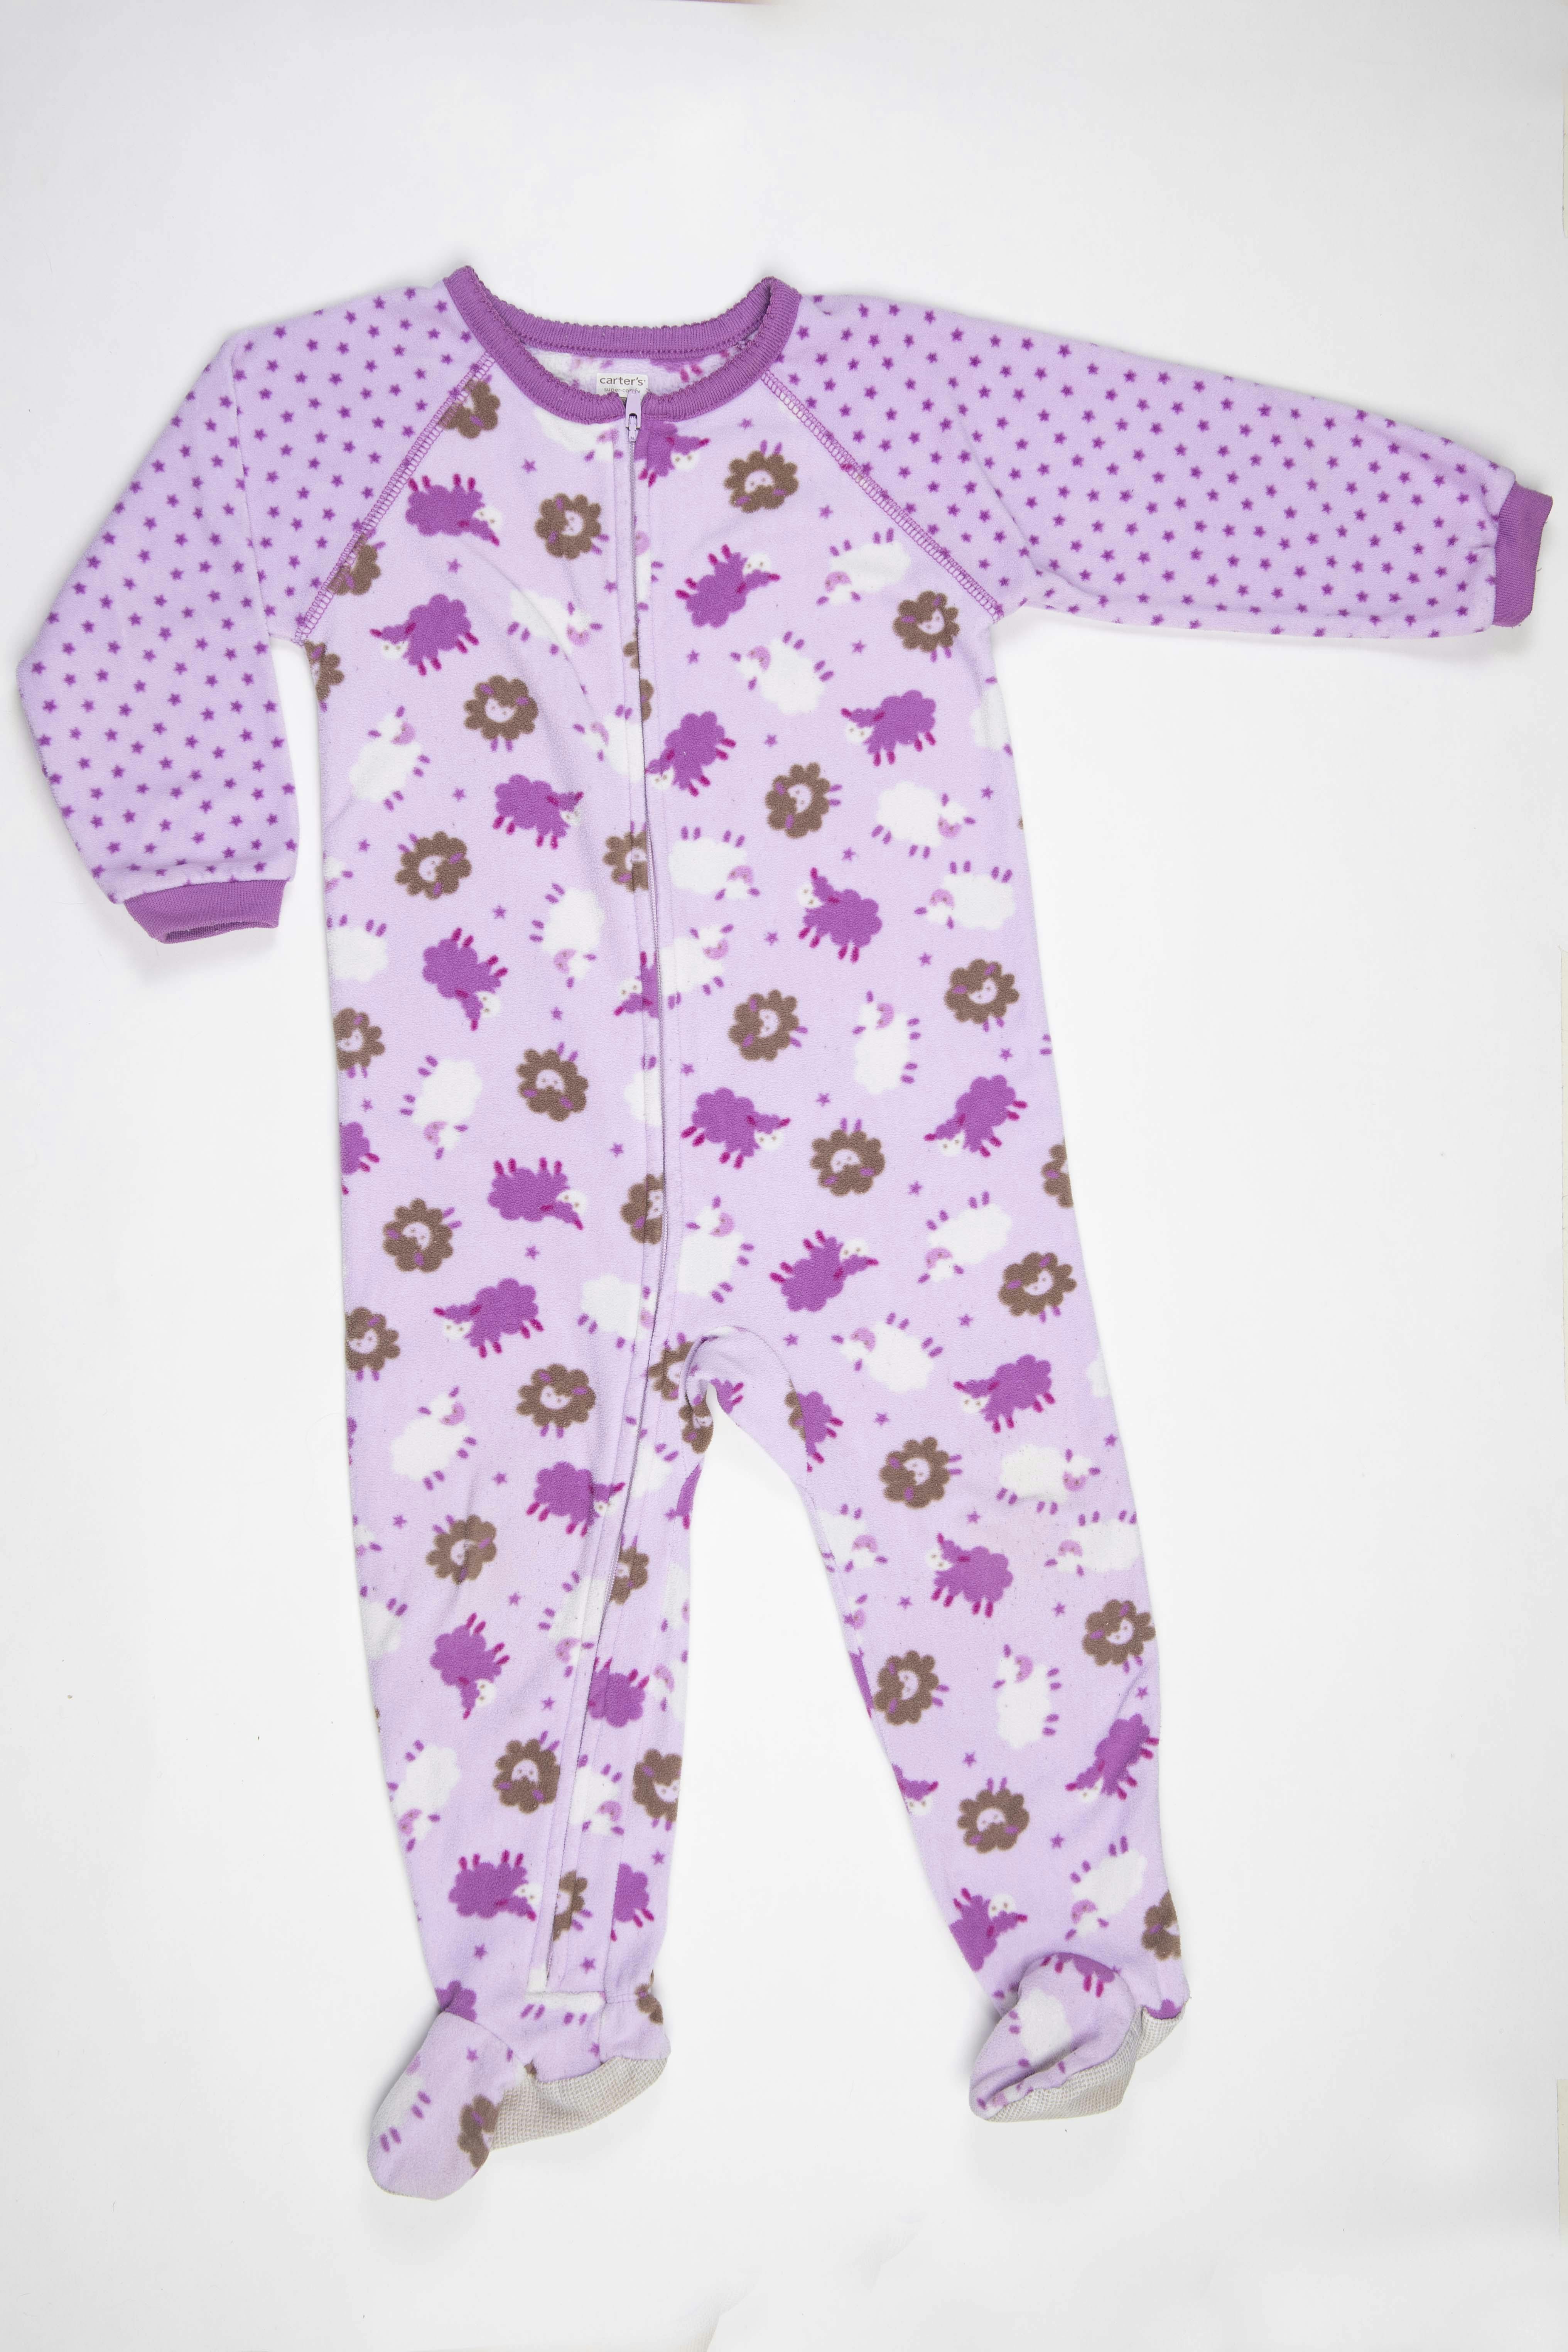 Pijama lila con ovejitas de polar, suela antideslizante - Carter's